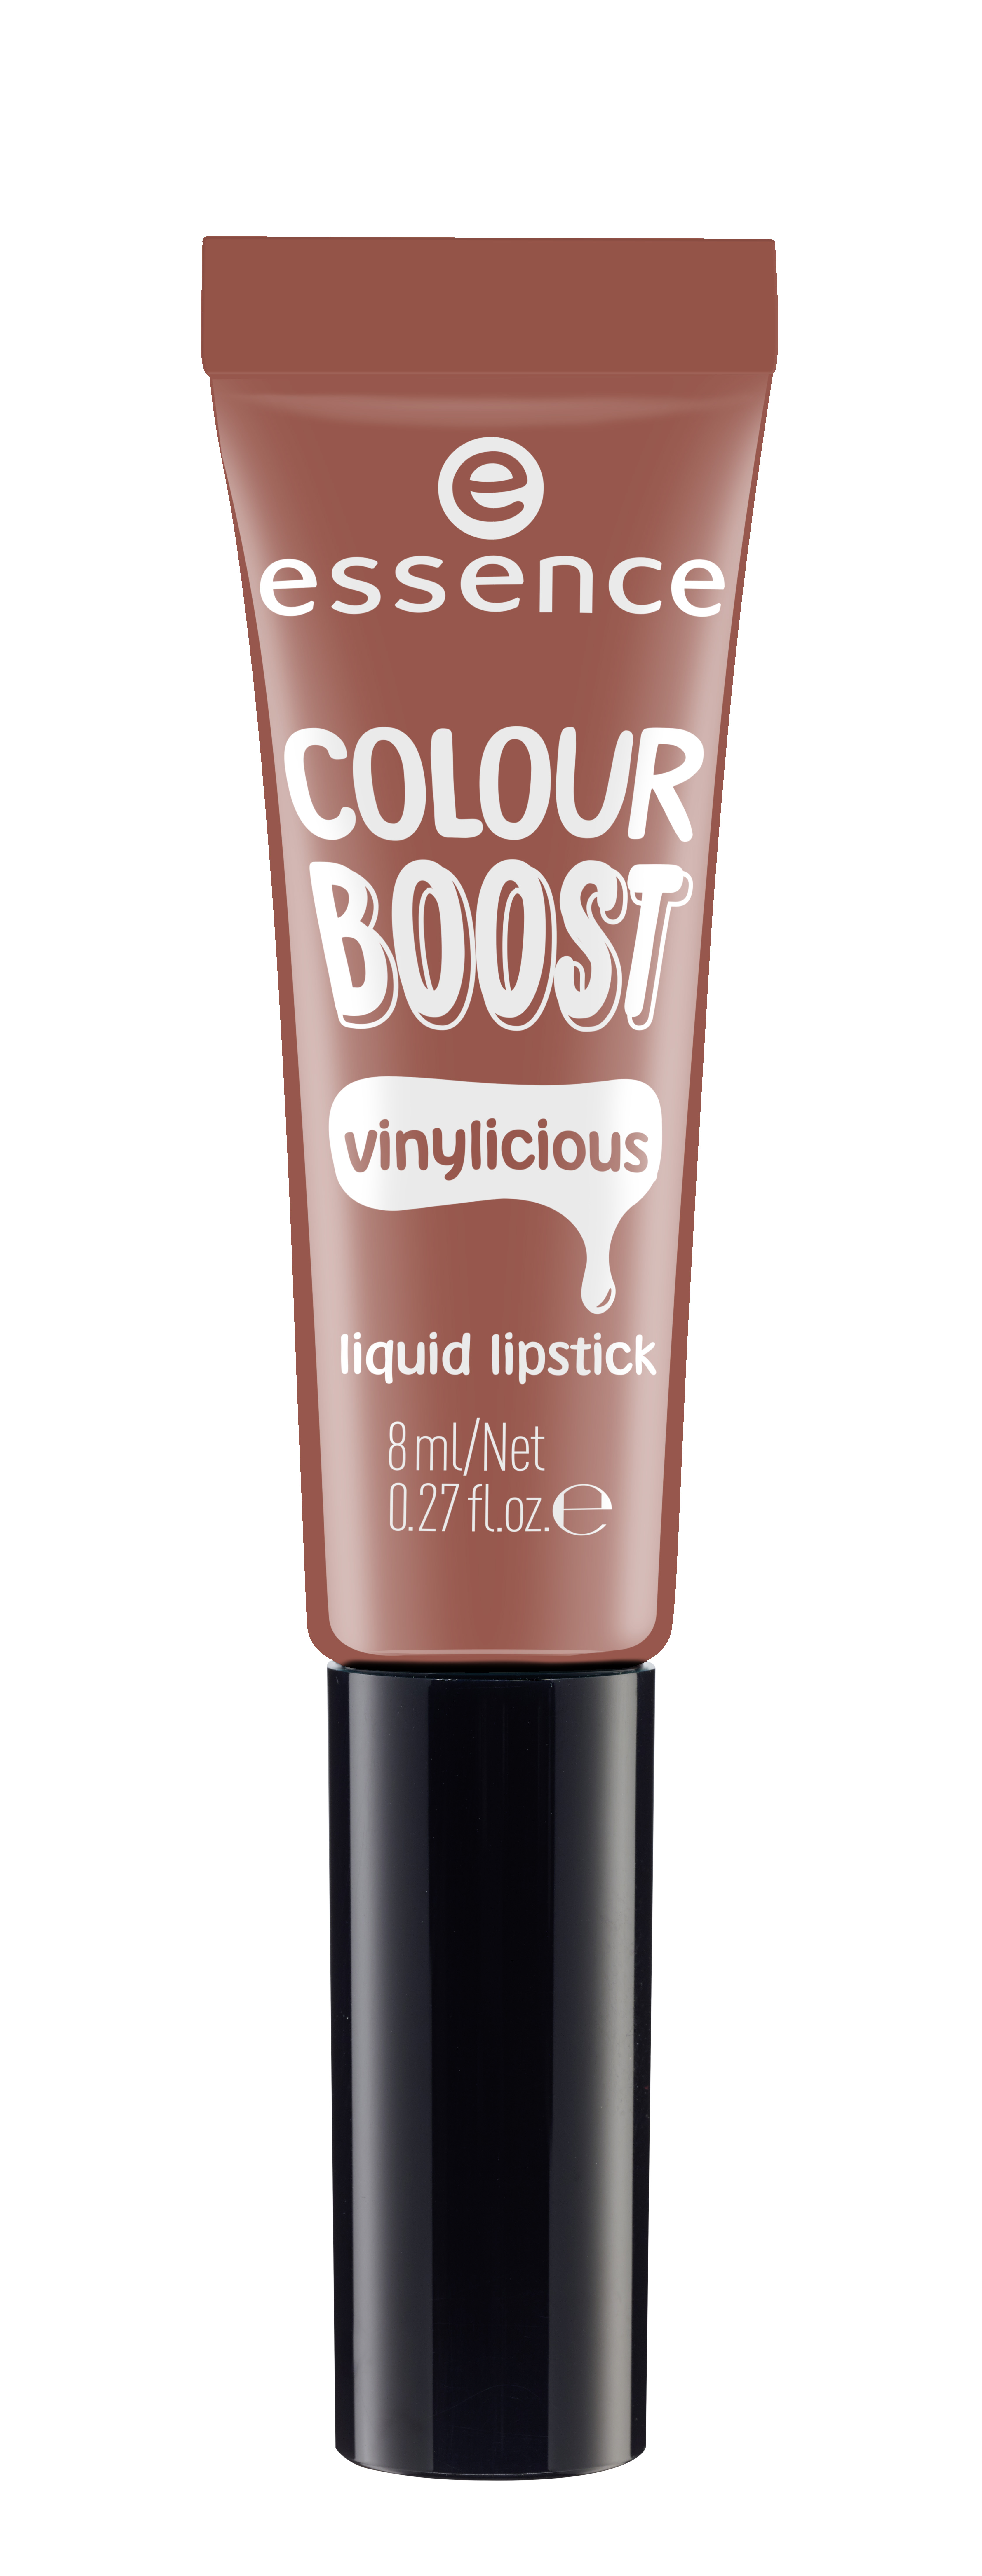 essence colour boost vinylicious liquid lipstick 02 - เอสเซนส์คัลเลอร์บูสท์ไวนิลลิเชียสลิควิดลิปสติก 02